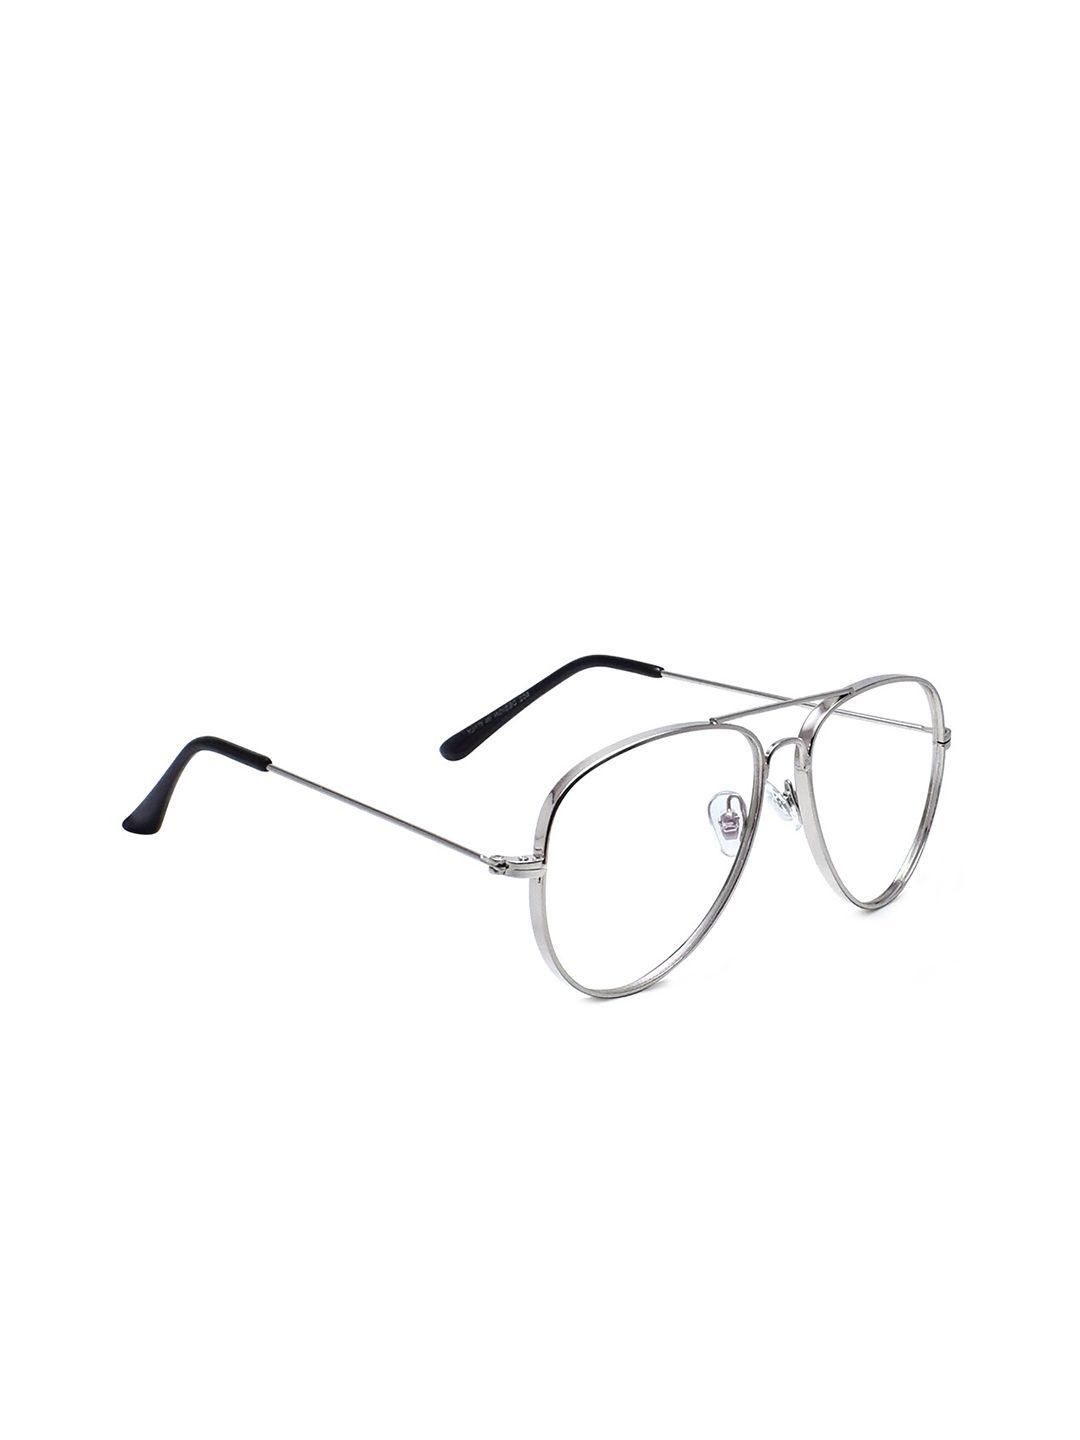 peter jones eyewear unisex silver-toned anti glare full rim aviator frames